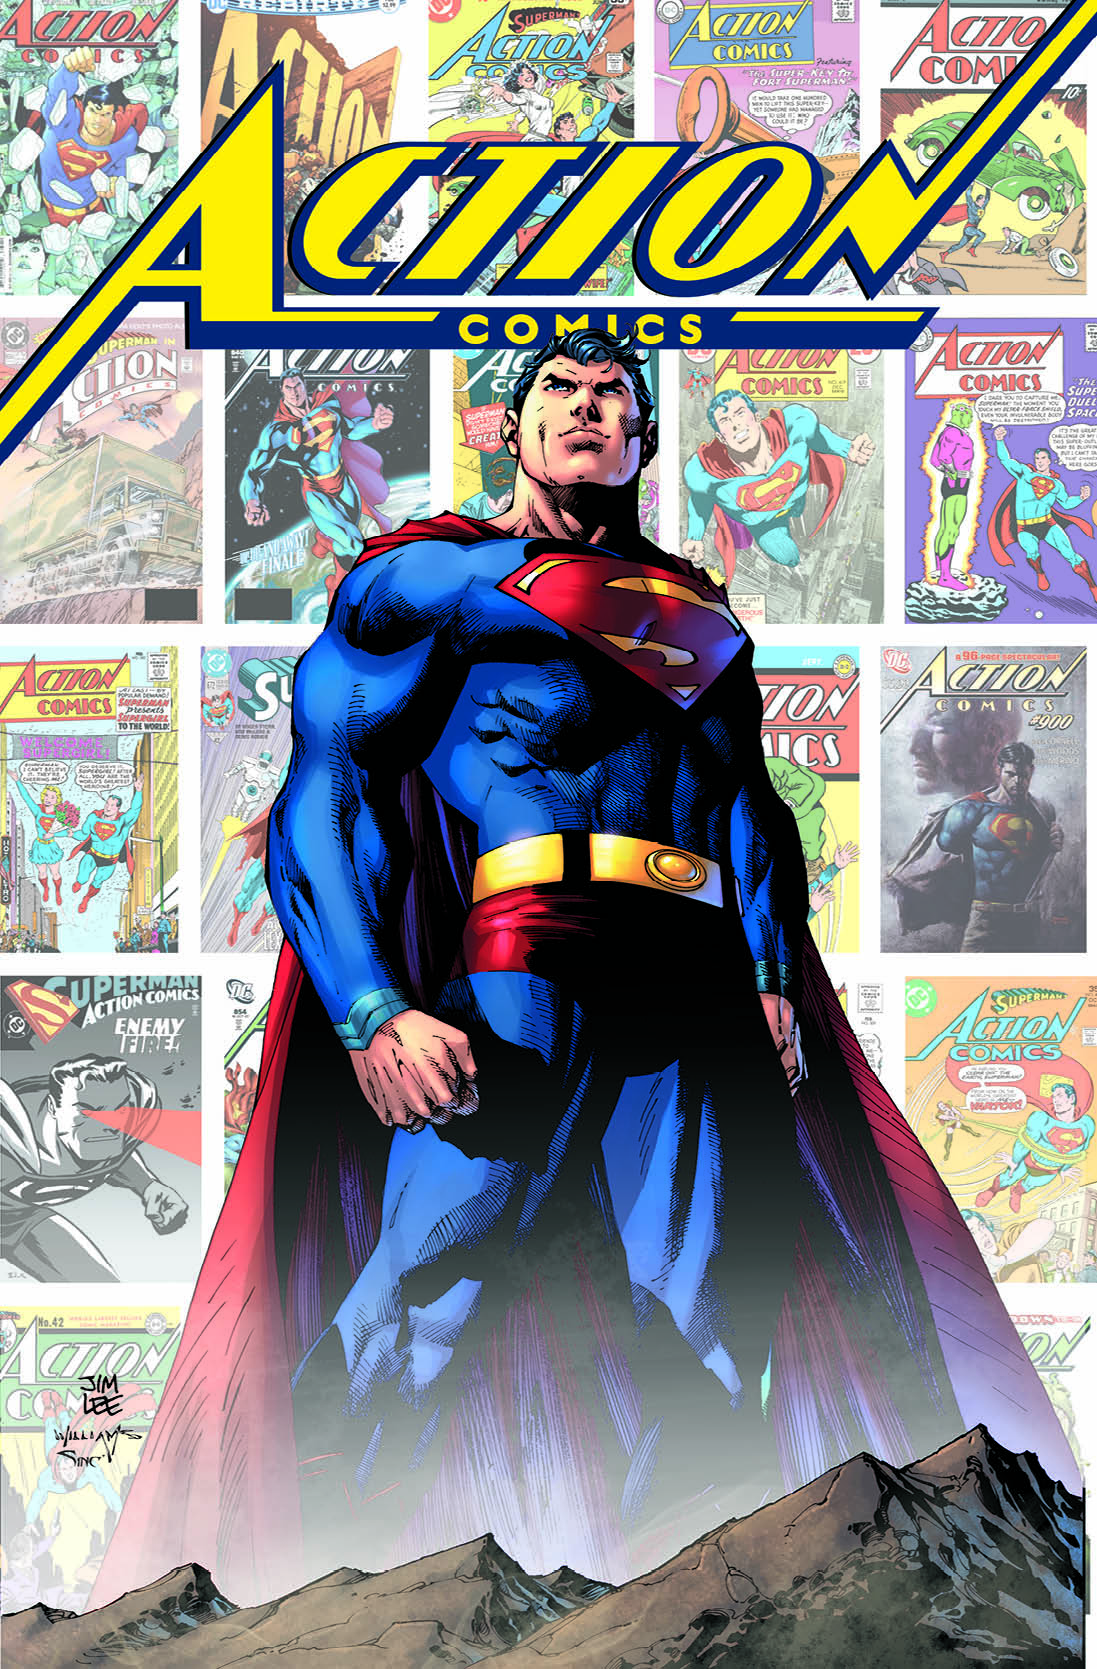 Action Comics 1000 80 Years of Superman.jpg